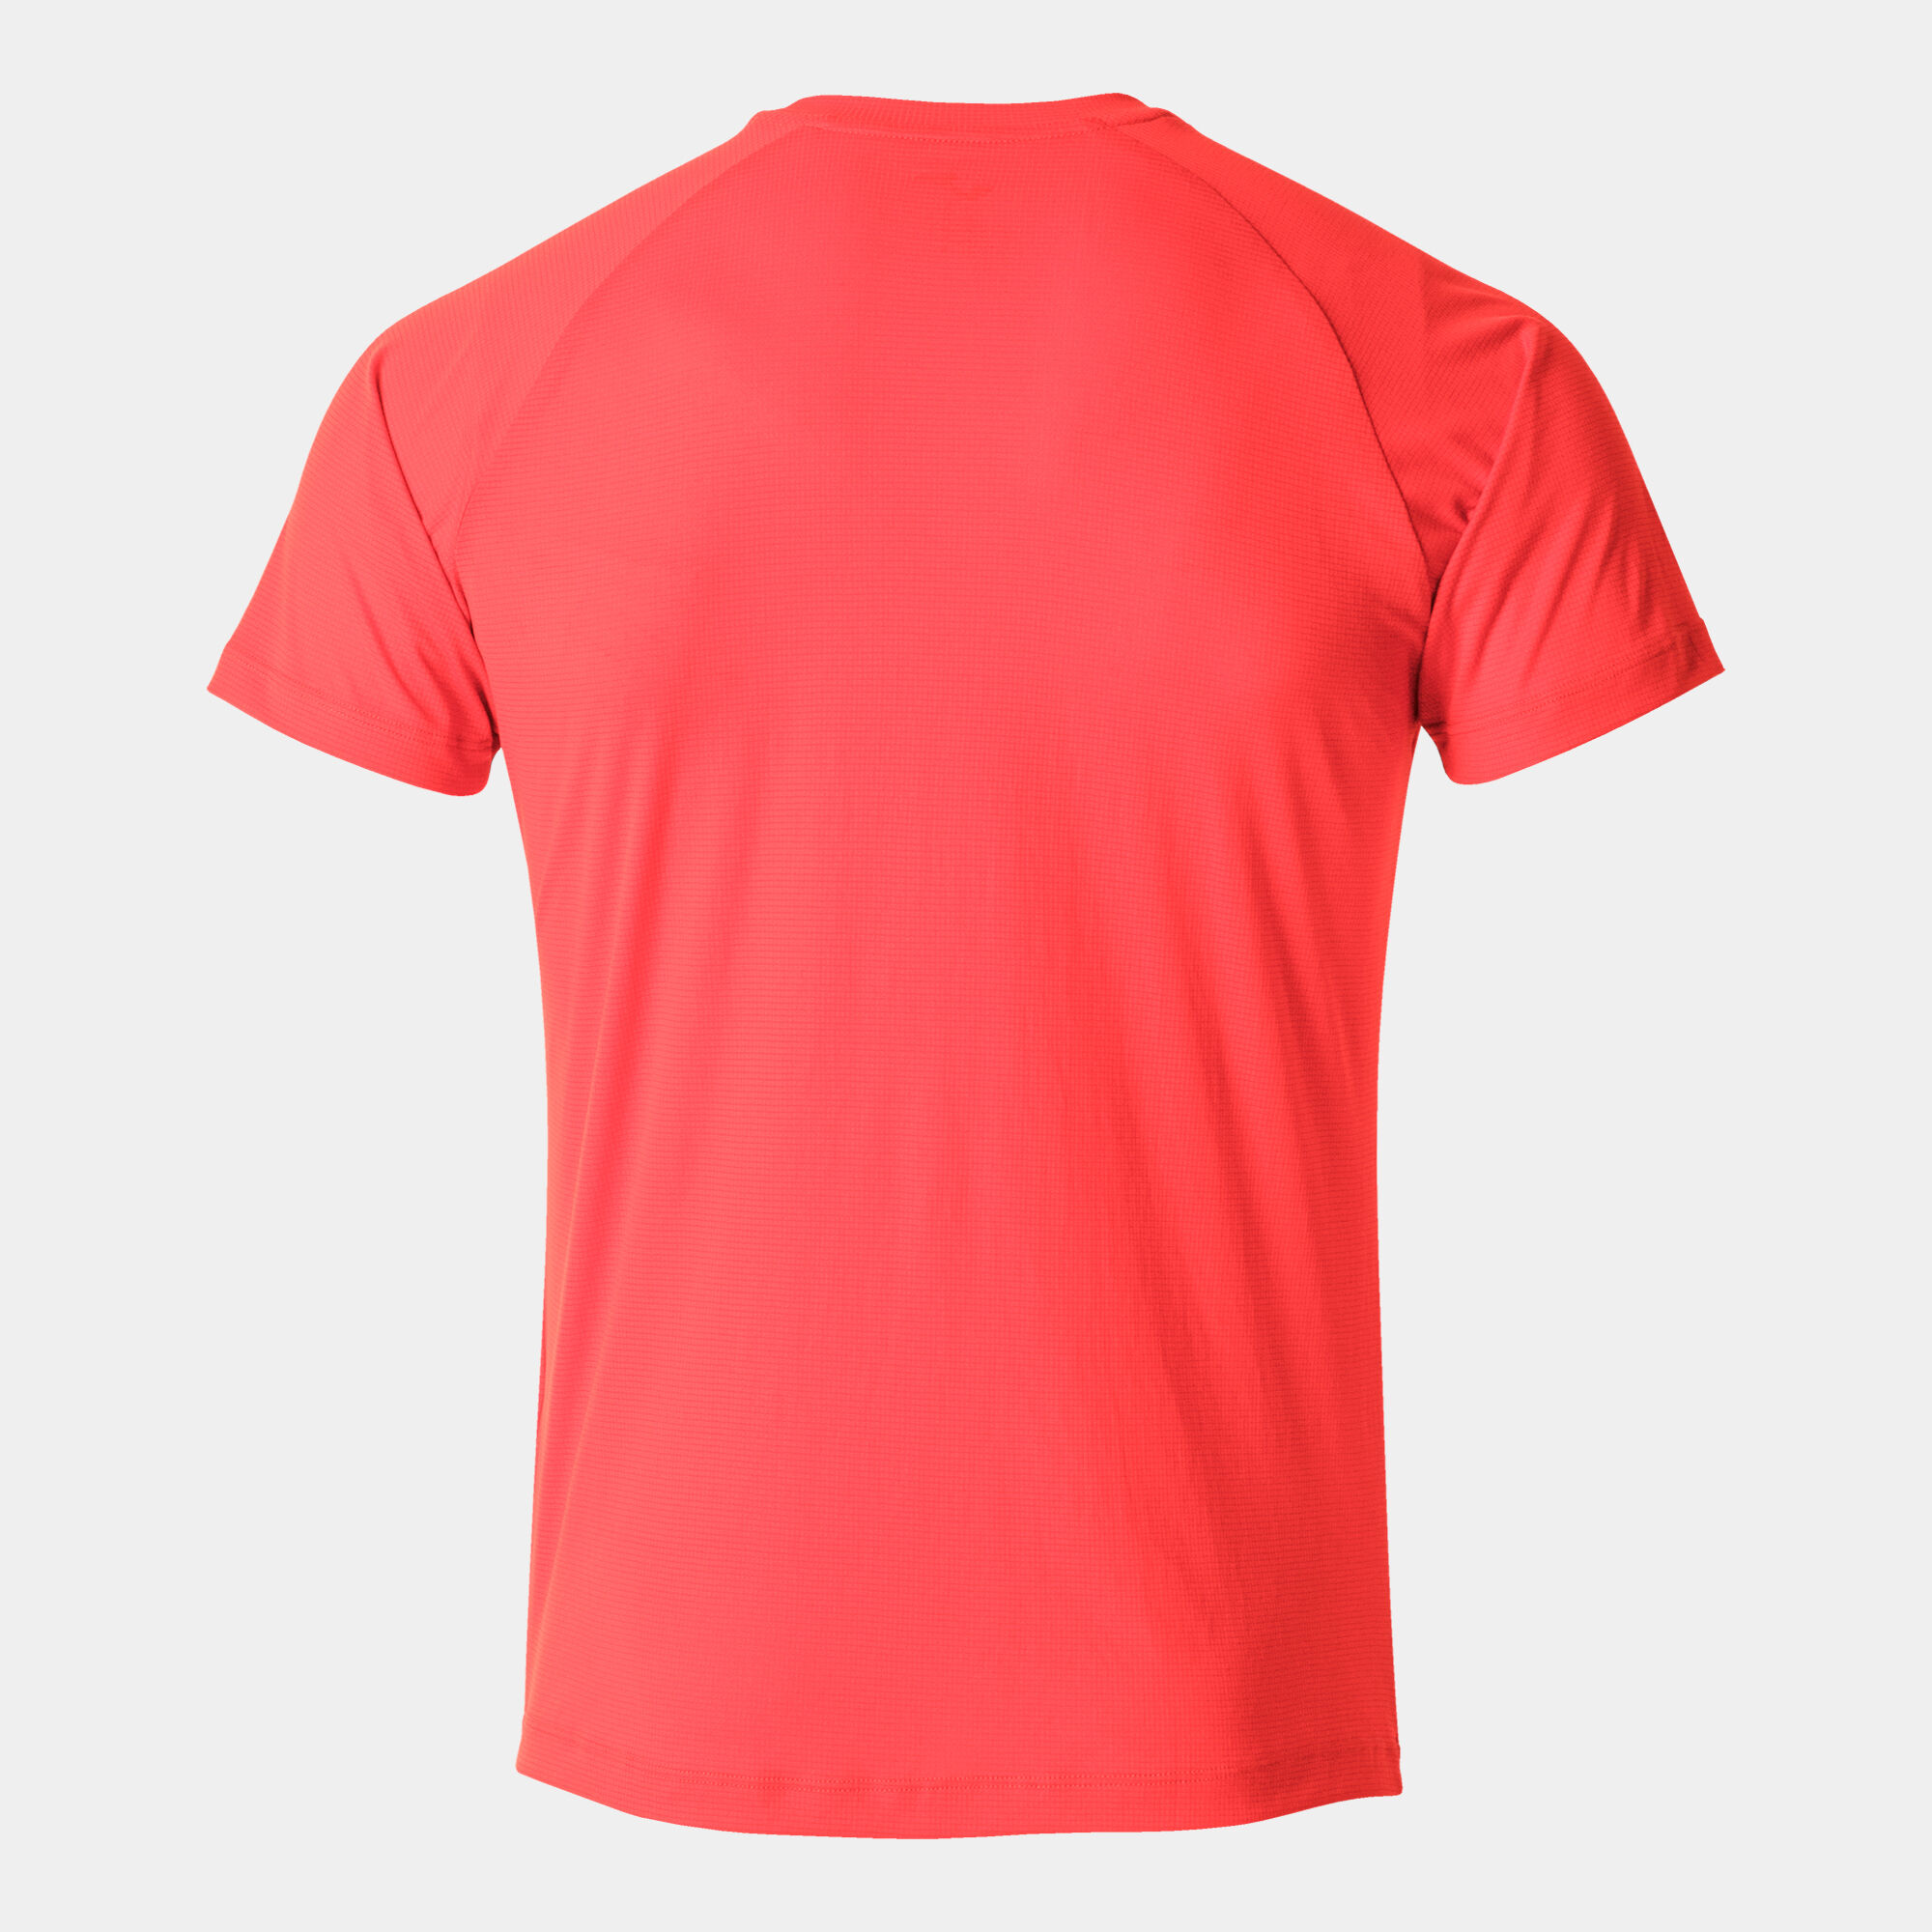 Camiseta manga corta hombre R-Combi coral flúor